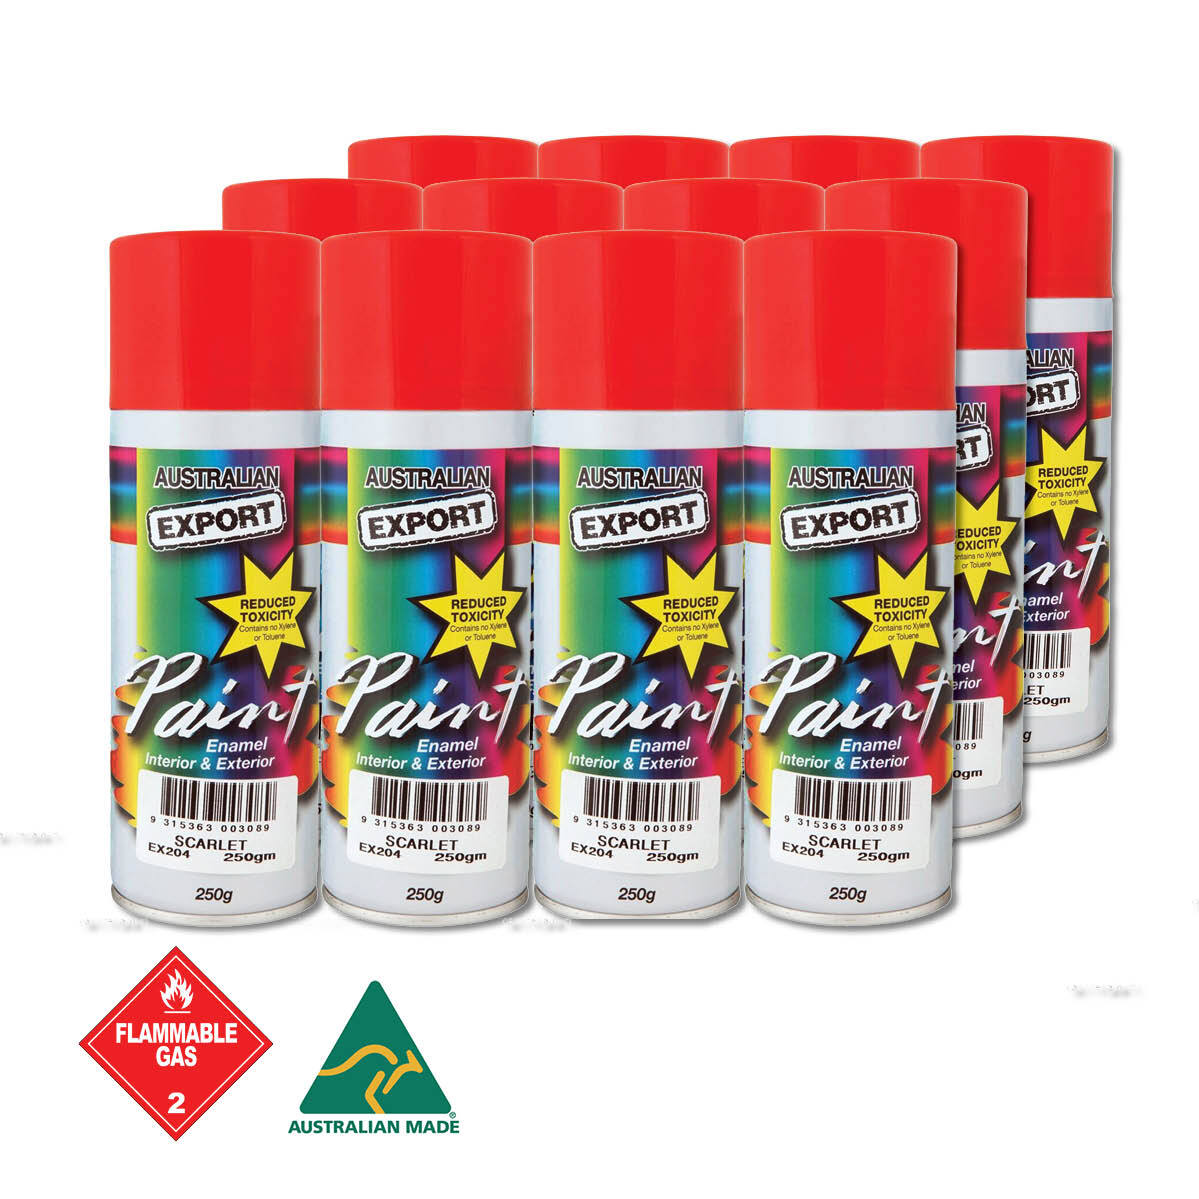 Australian Export 12PK 250gm Aerosol Spray Paint Cans [Colour: Scarlet Red]